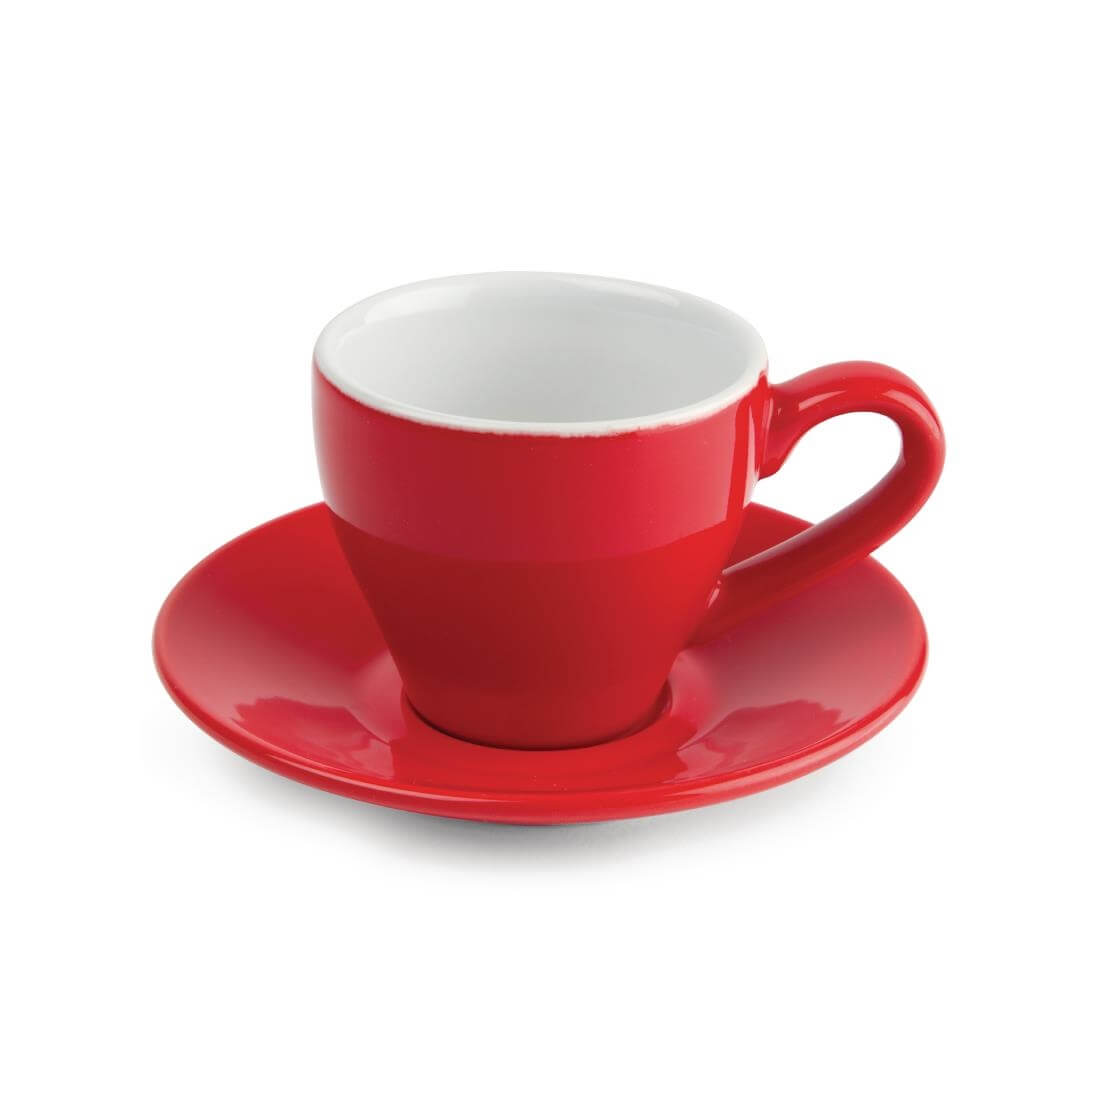 Espresso Cup - Red